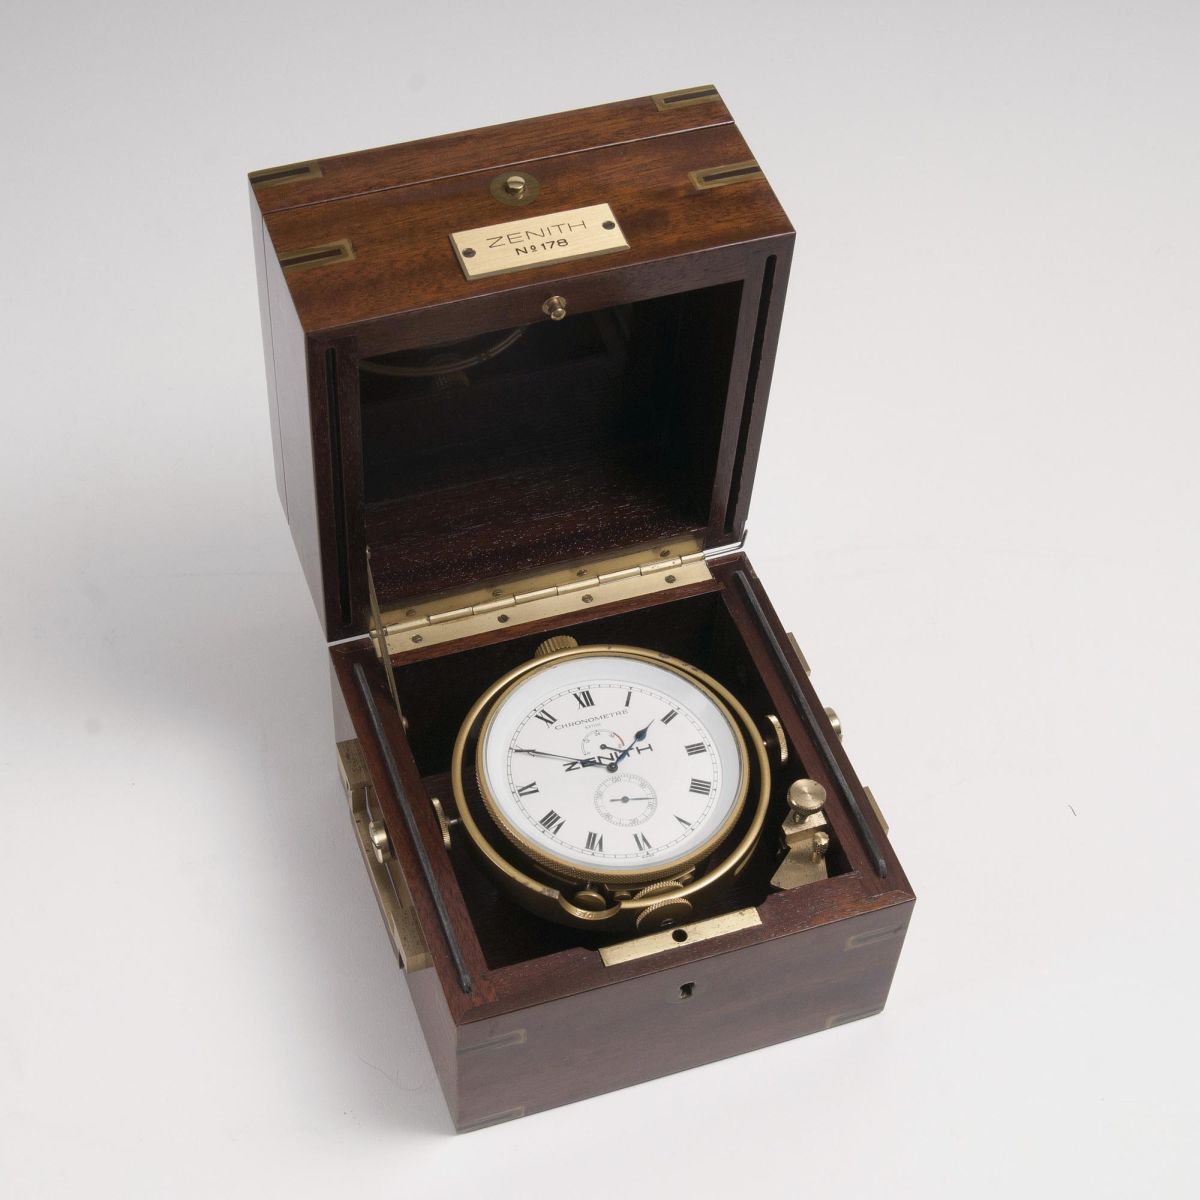 Schiffschronometer No. 178